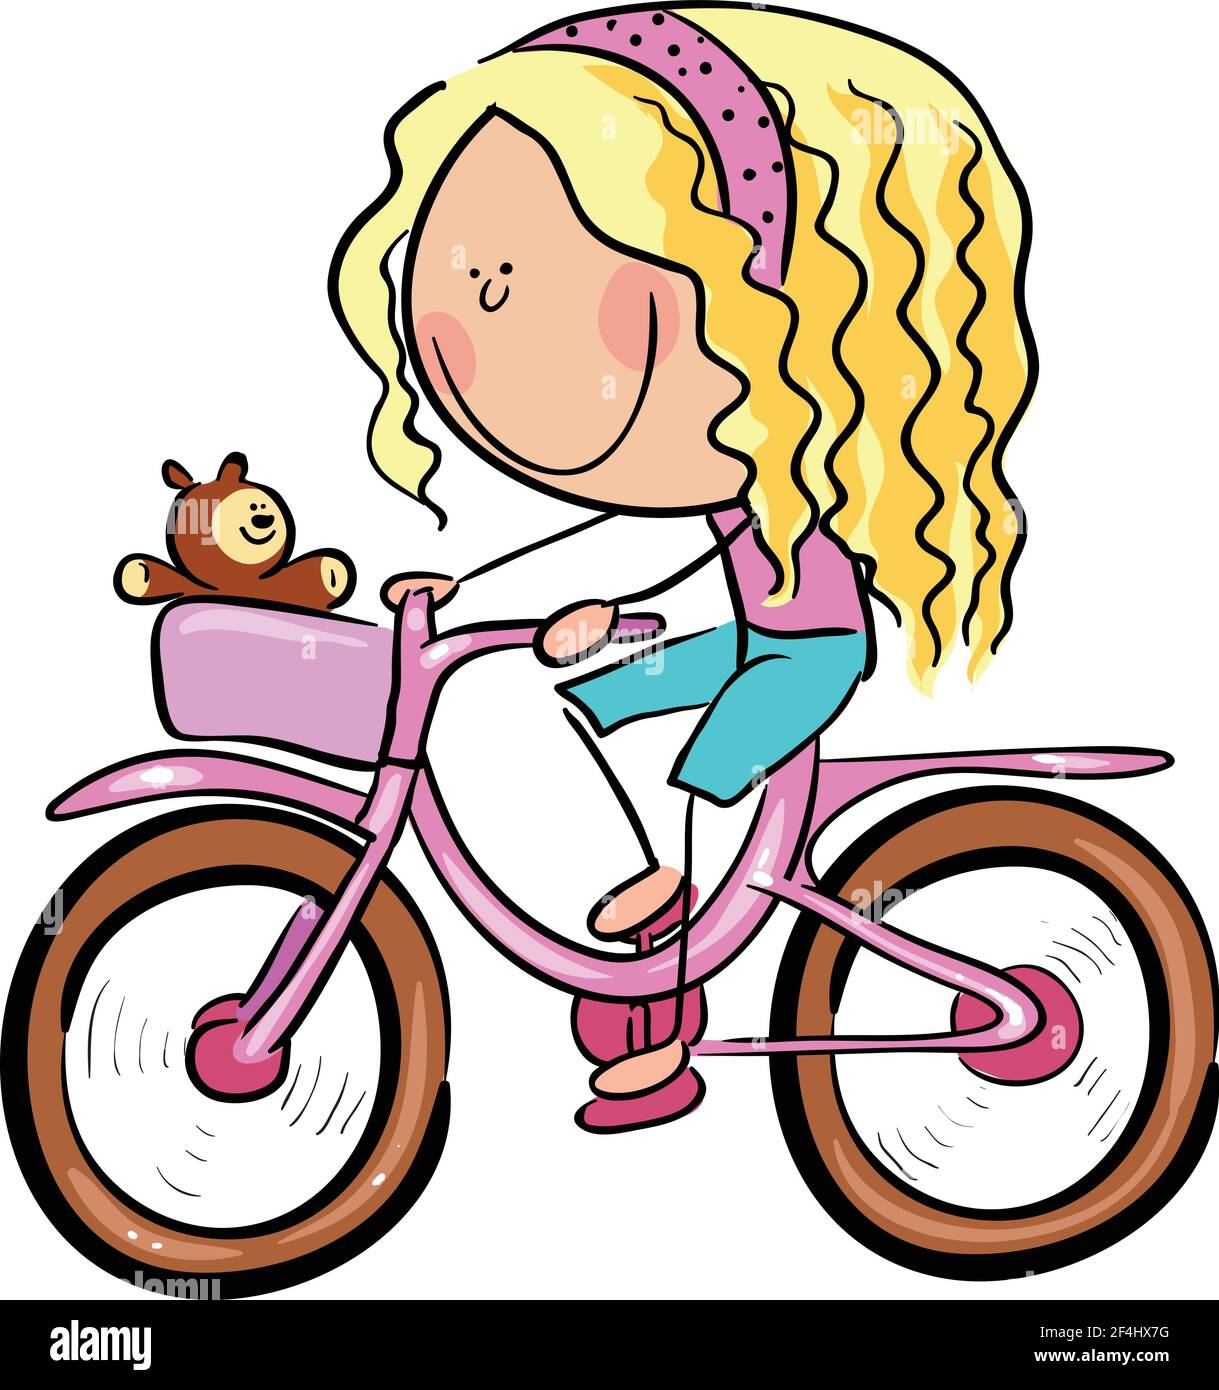 Cartoon Junge Frau reitet Fahrrad mit Blumenstrauß im Korb. Stock Vektor